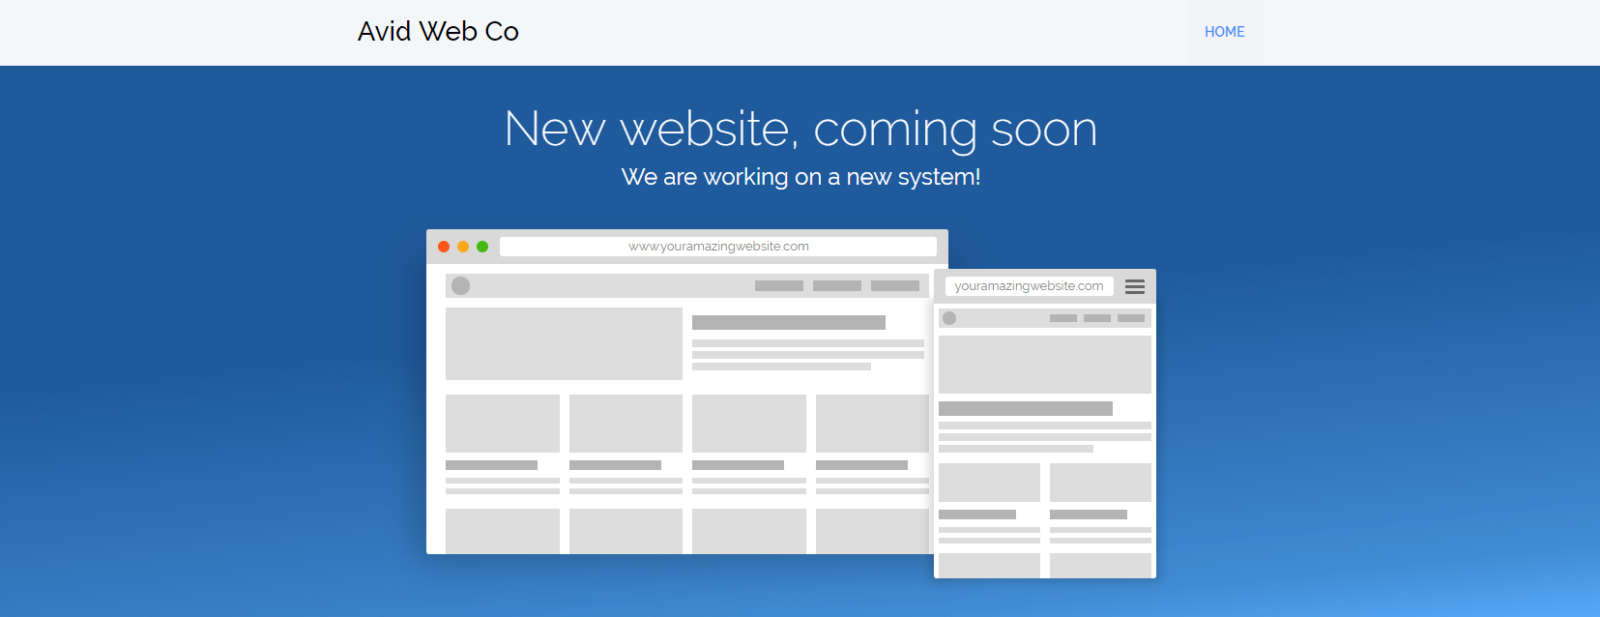 Screenshot of the Avid Web Co website under construction